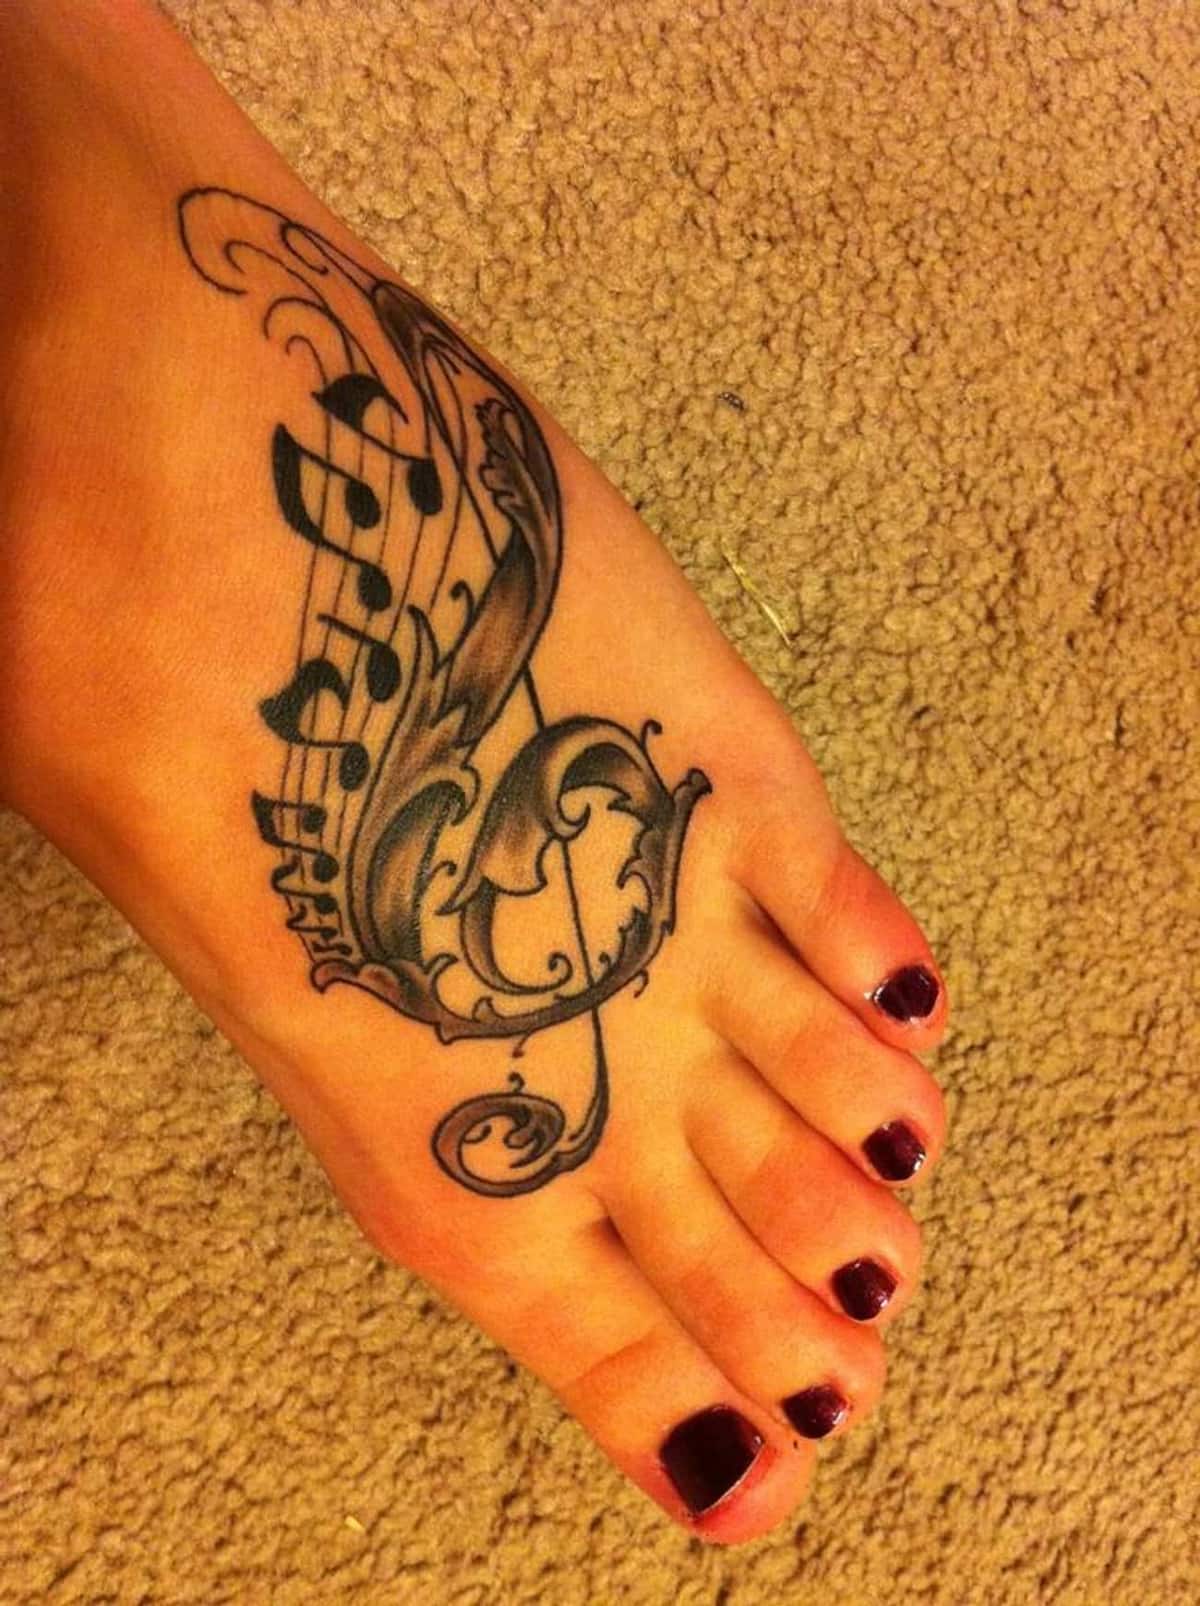 Sorin Gabor at Sugar City Tattoo : Tattoos : Music : Bio Feet music abstract